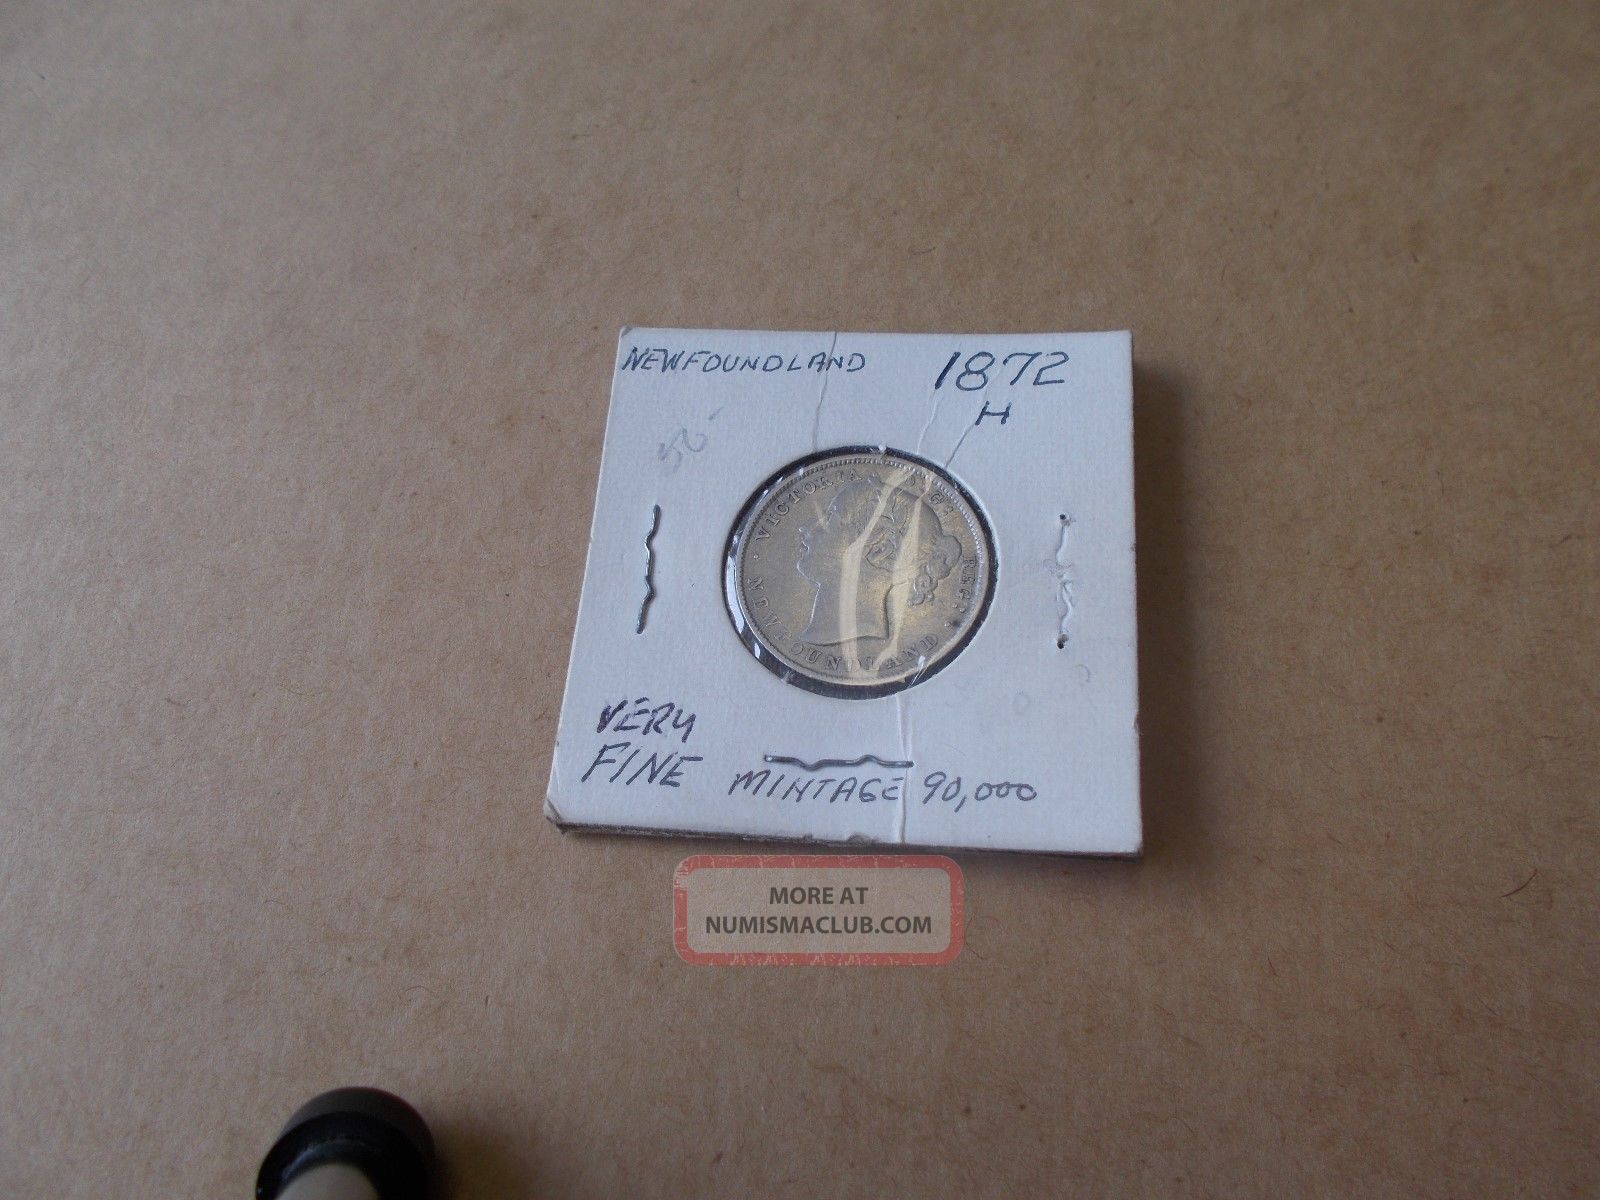 Newfoundland 20 Cent Coin 1872h Coins: Canada photo